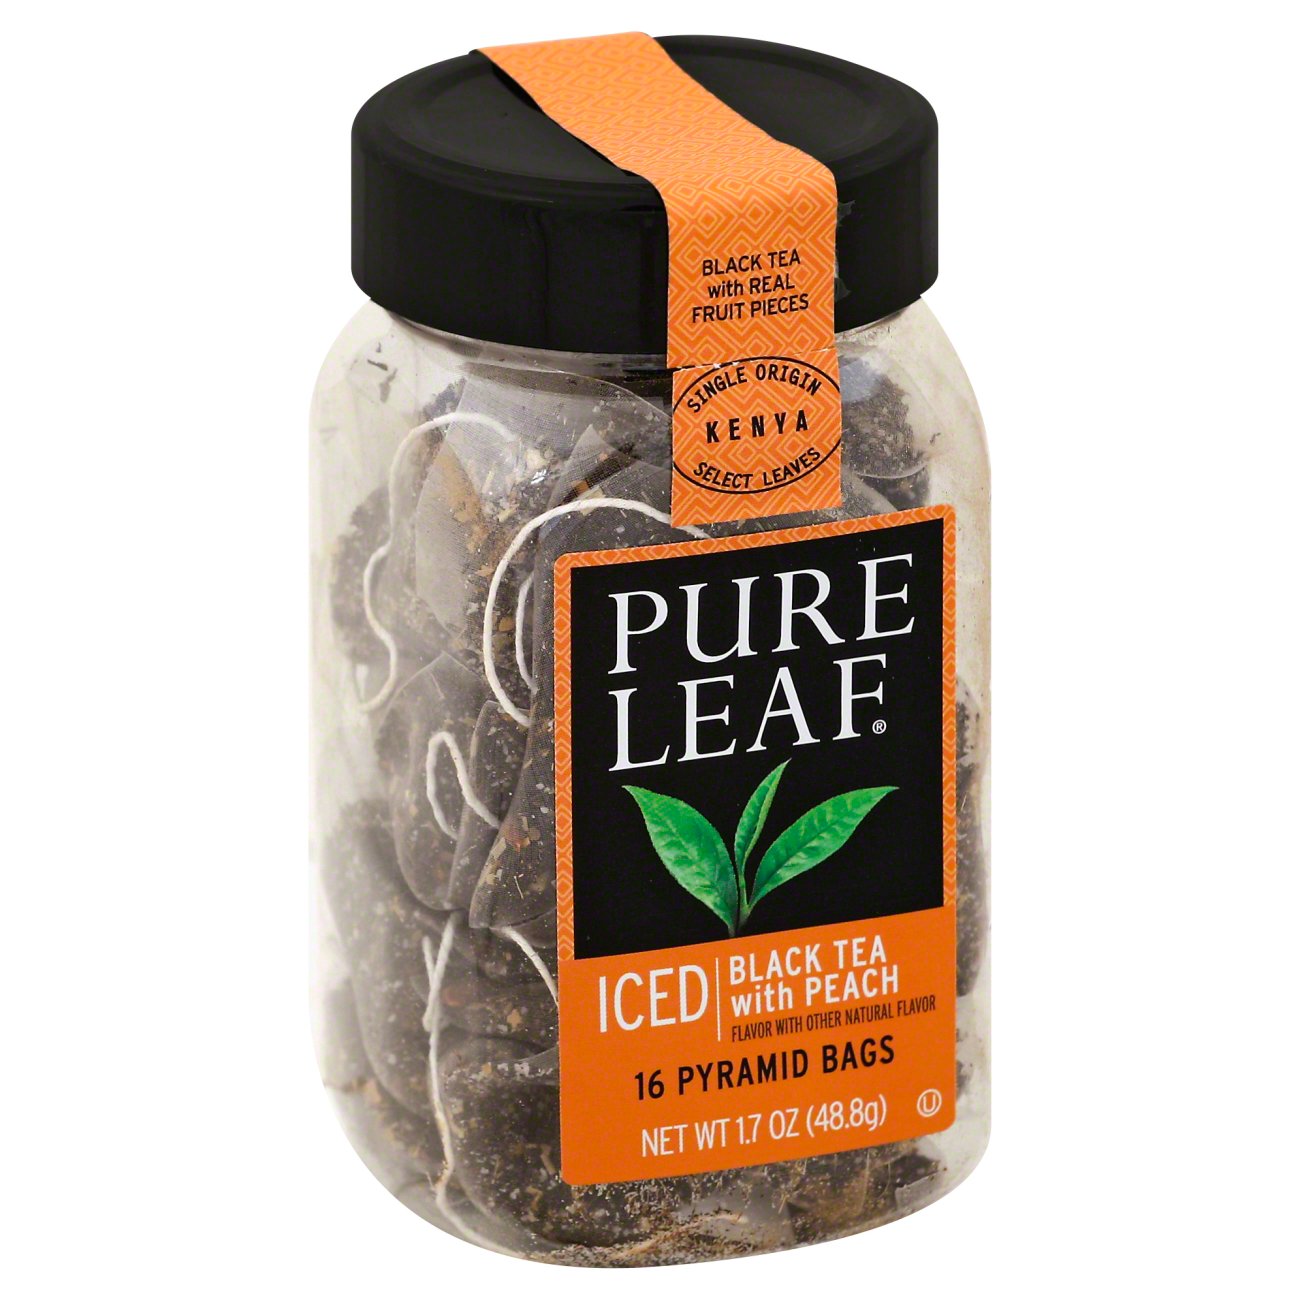 Pure Leaf Pyramid Tea Bags Iced Black Tea With Peach Shop Tea at HEB